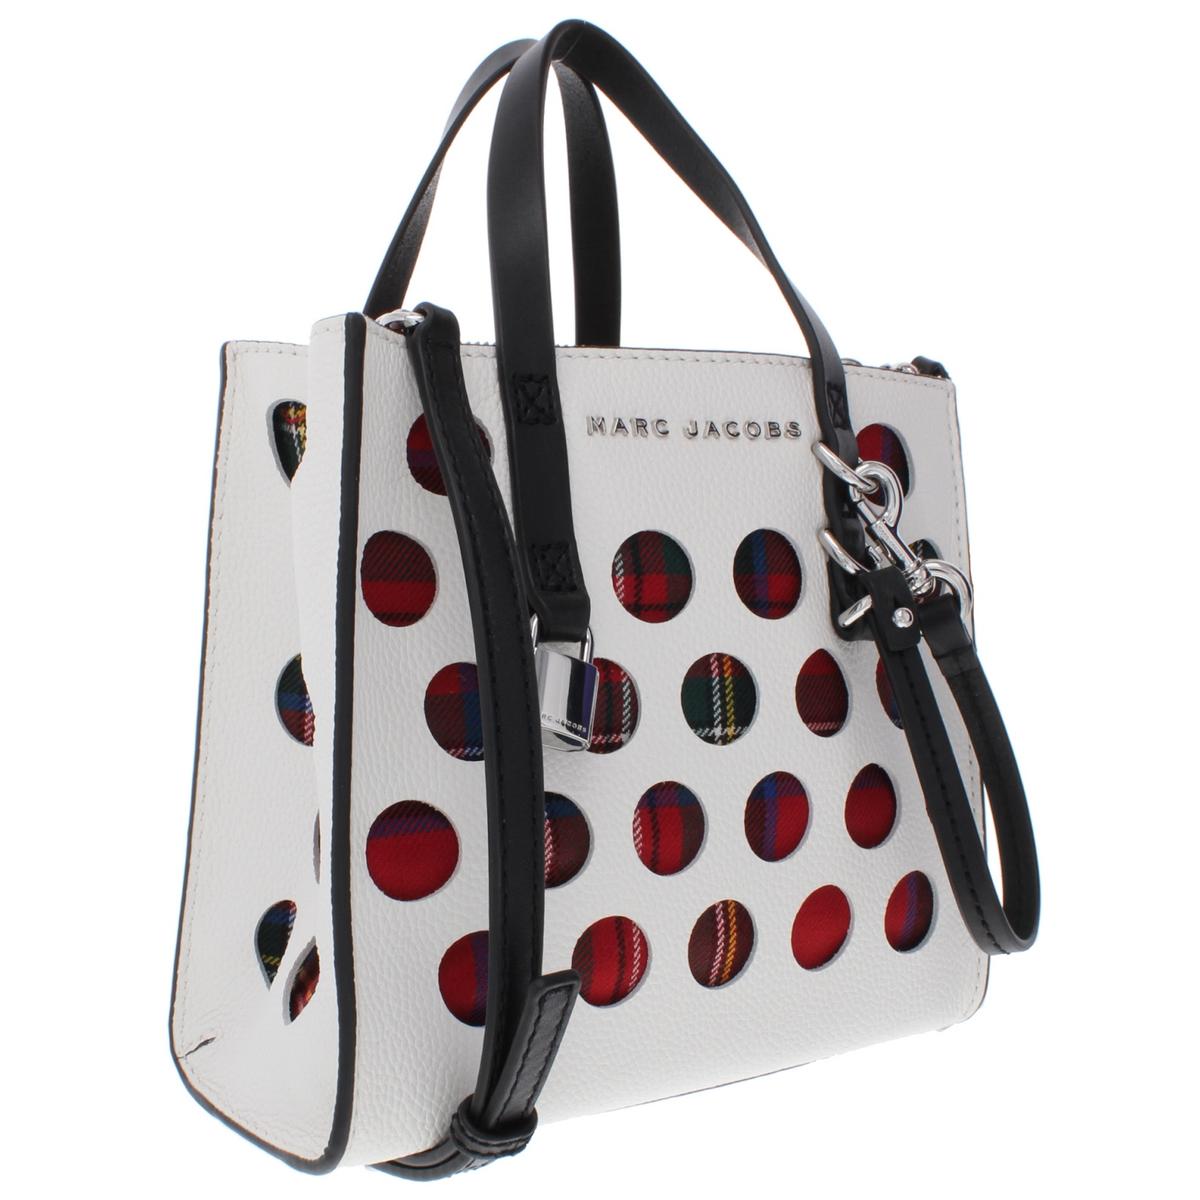 Marc Jacobs Womens White Leather Plaid Mini Tote Handbag Purse Small BHFO 3737 | eBay